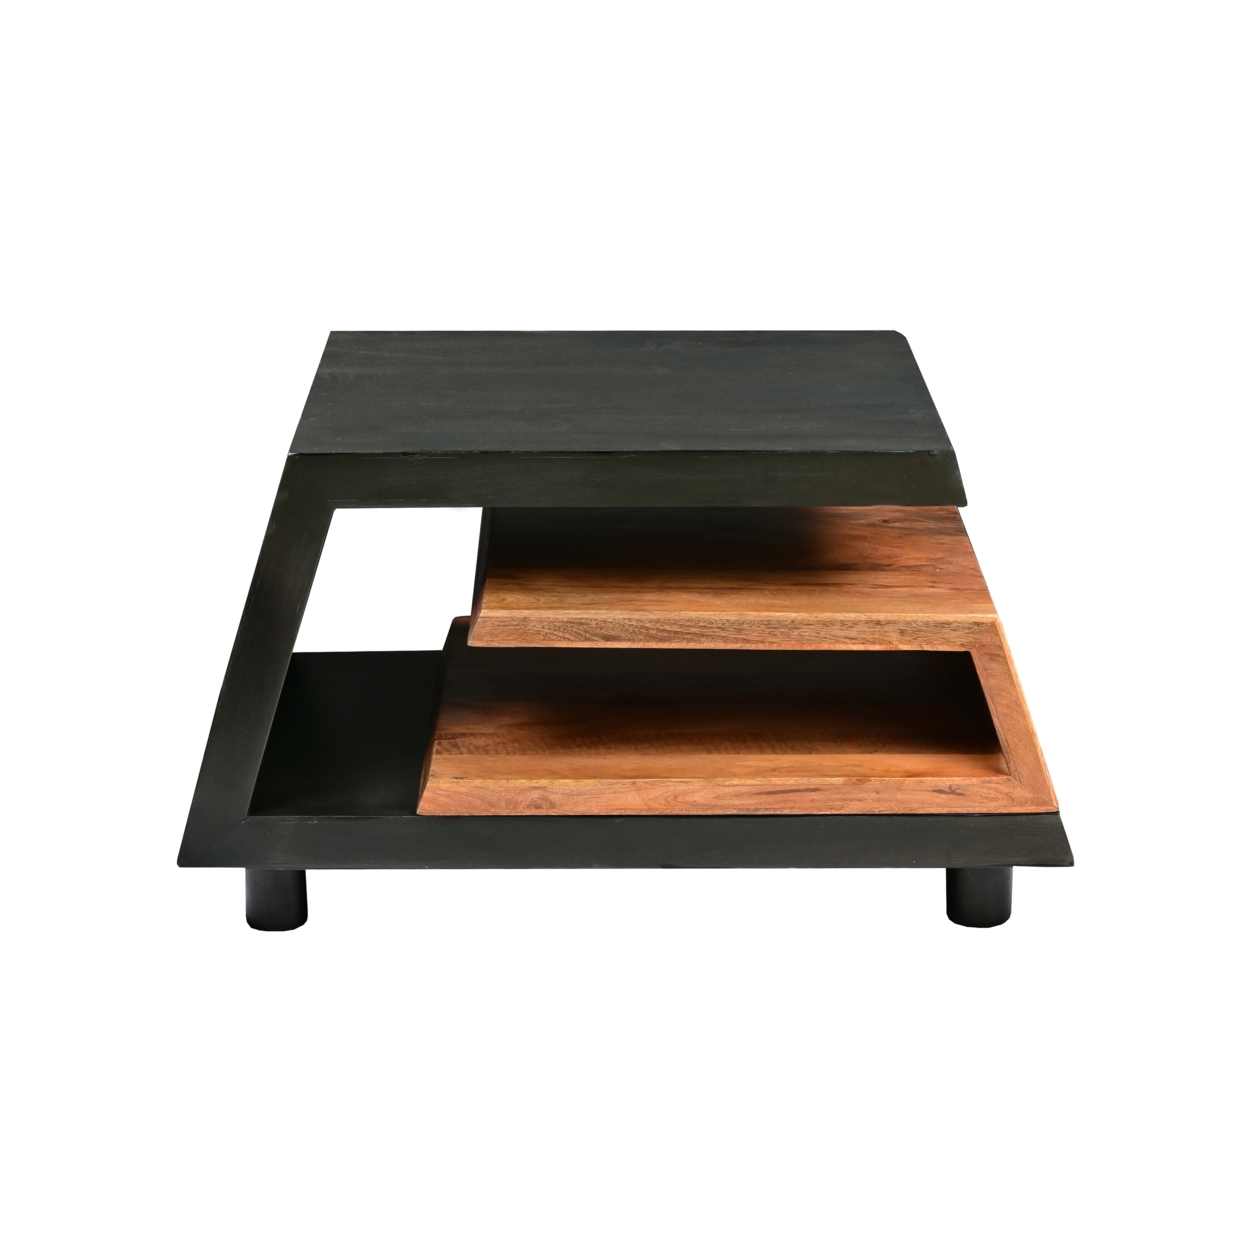 33 Inch Handcrafted Coffee Table, Geometric Dark Walnut And Natural Mango Wood Frame, Block Legs- Saltoro Sherpi